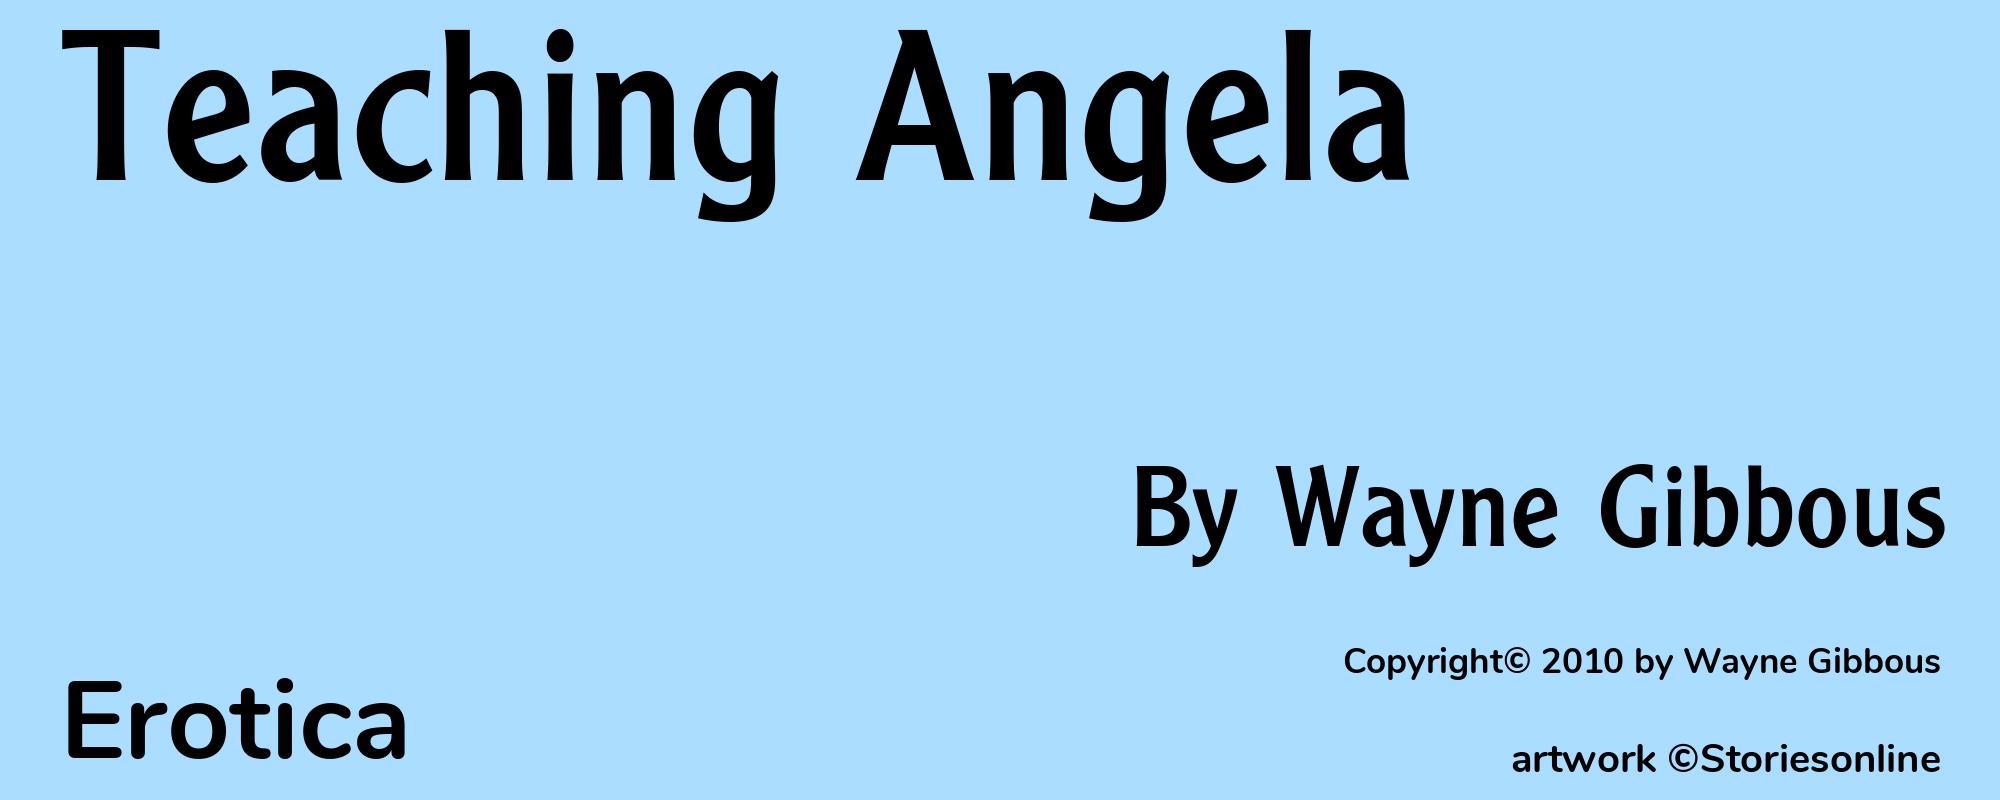 Teaching Angela - Cover